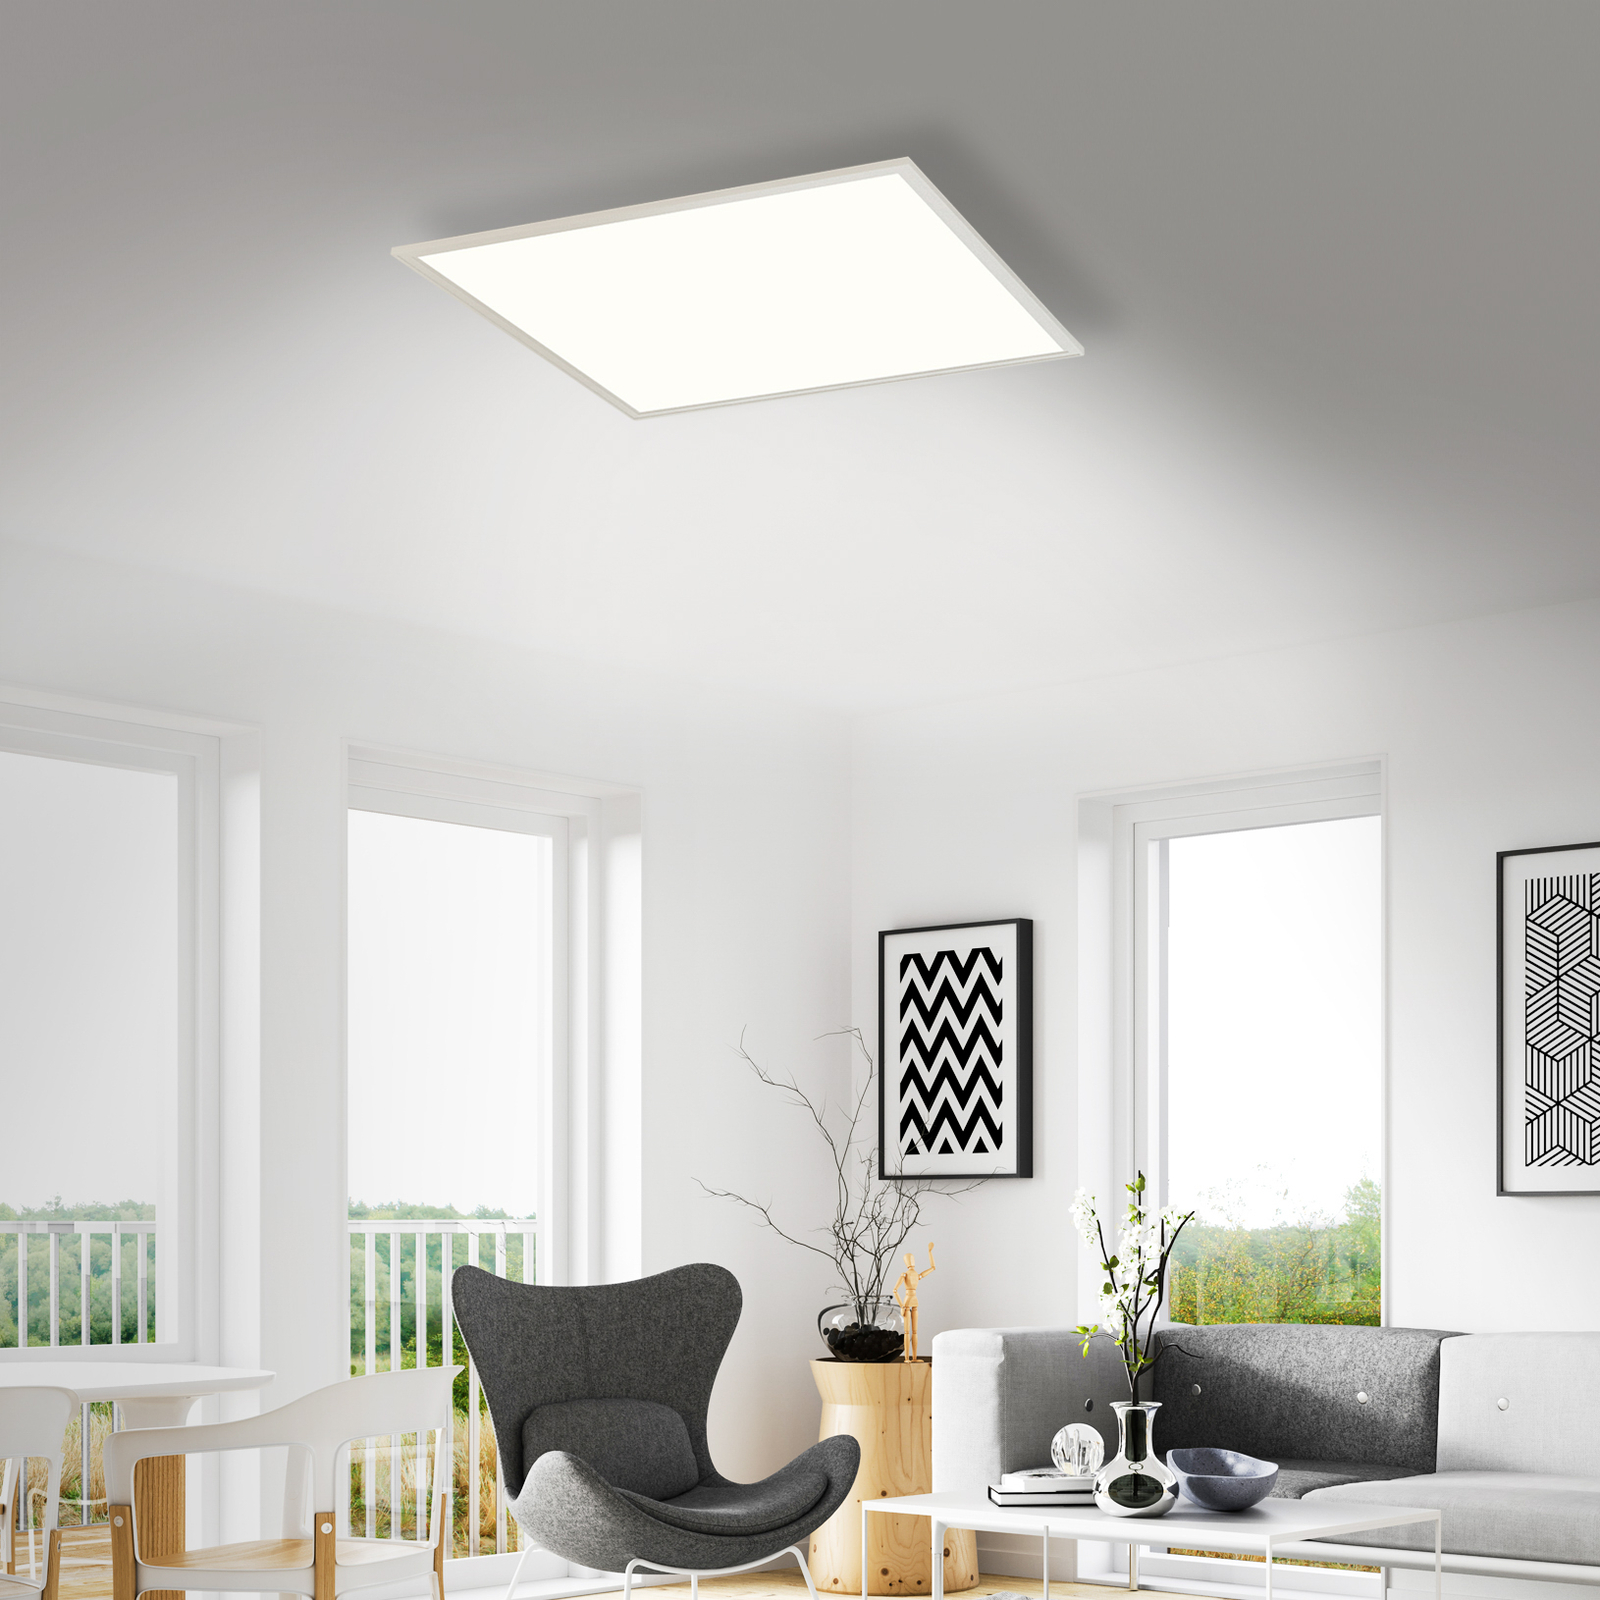 Panel LED Simple biały, ultrapłaski, 59,5x59,5 cm